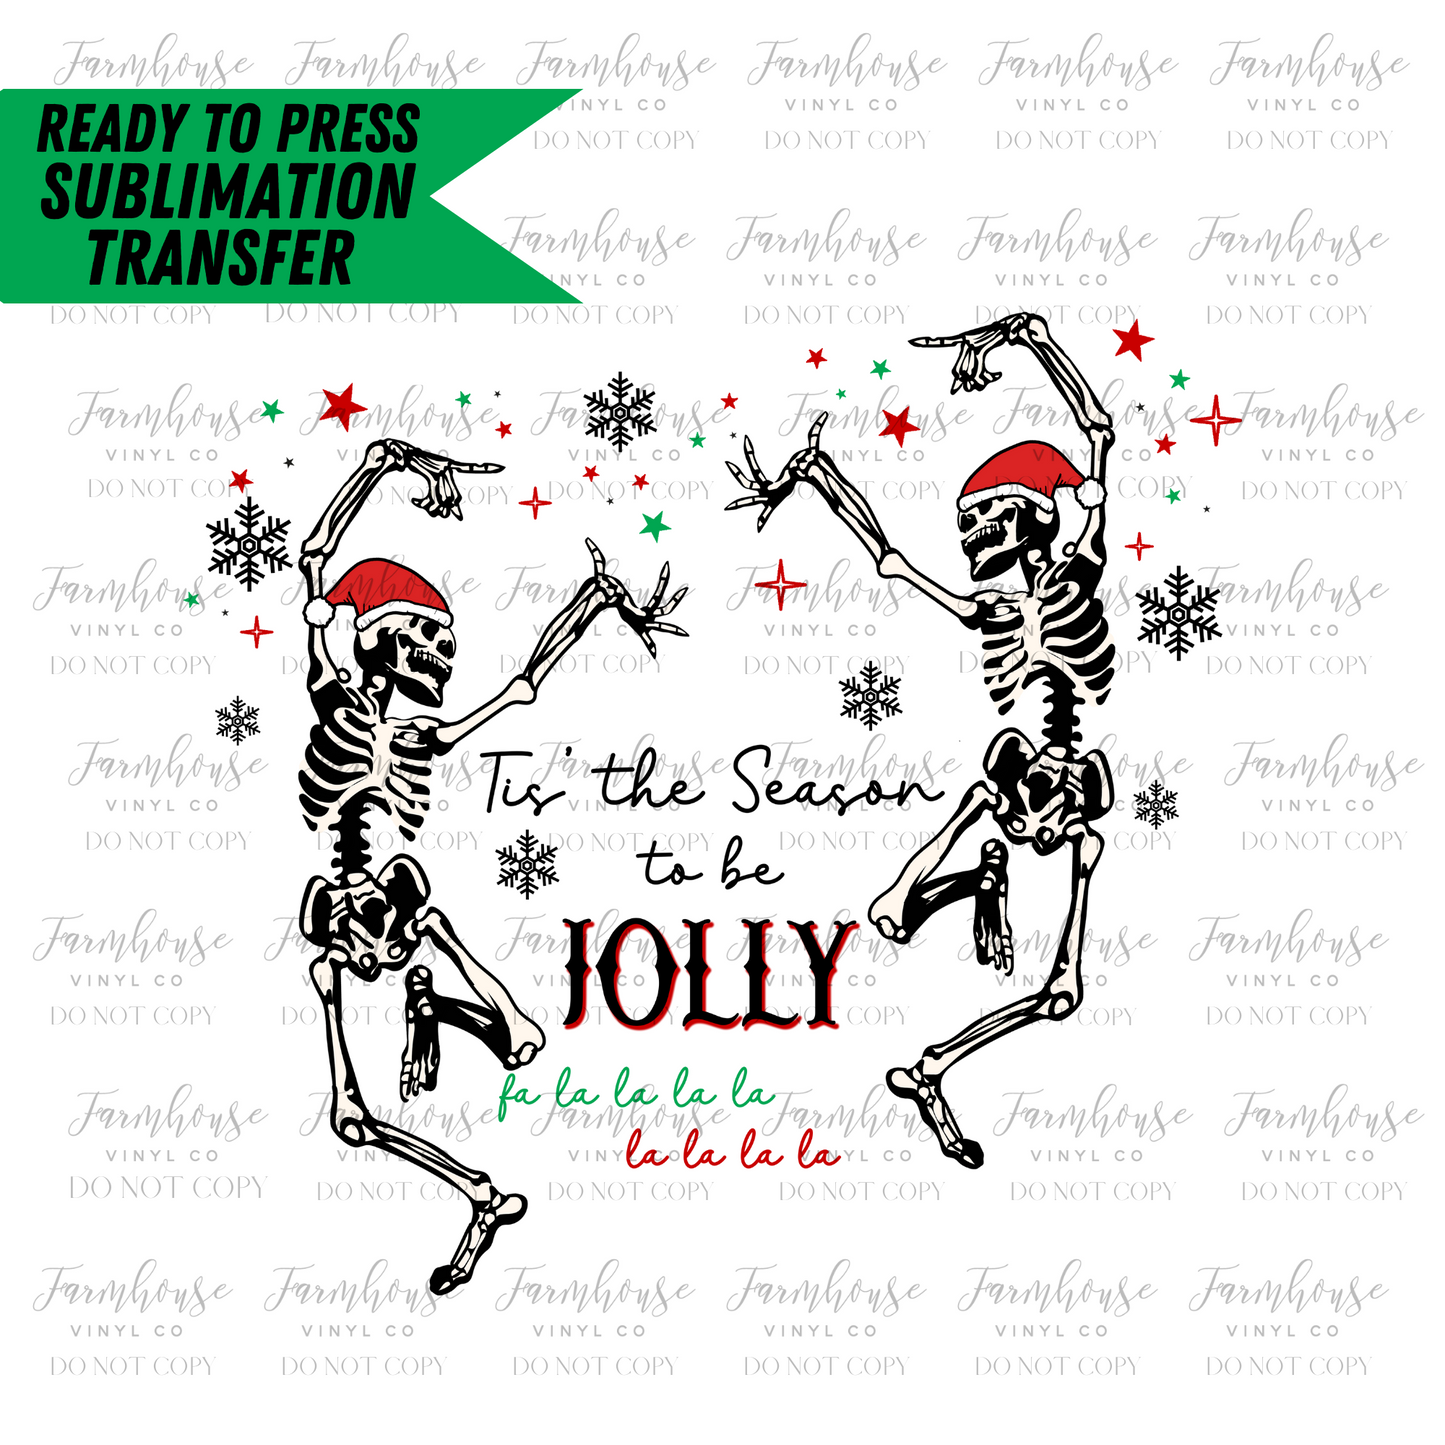 Tis The Season To Be Jolly Dancing Skeletons Ready To Press Sublimation Transfer - Farmhouse Vinyl Co